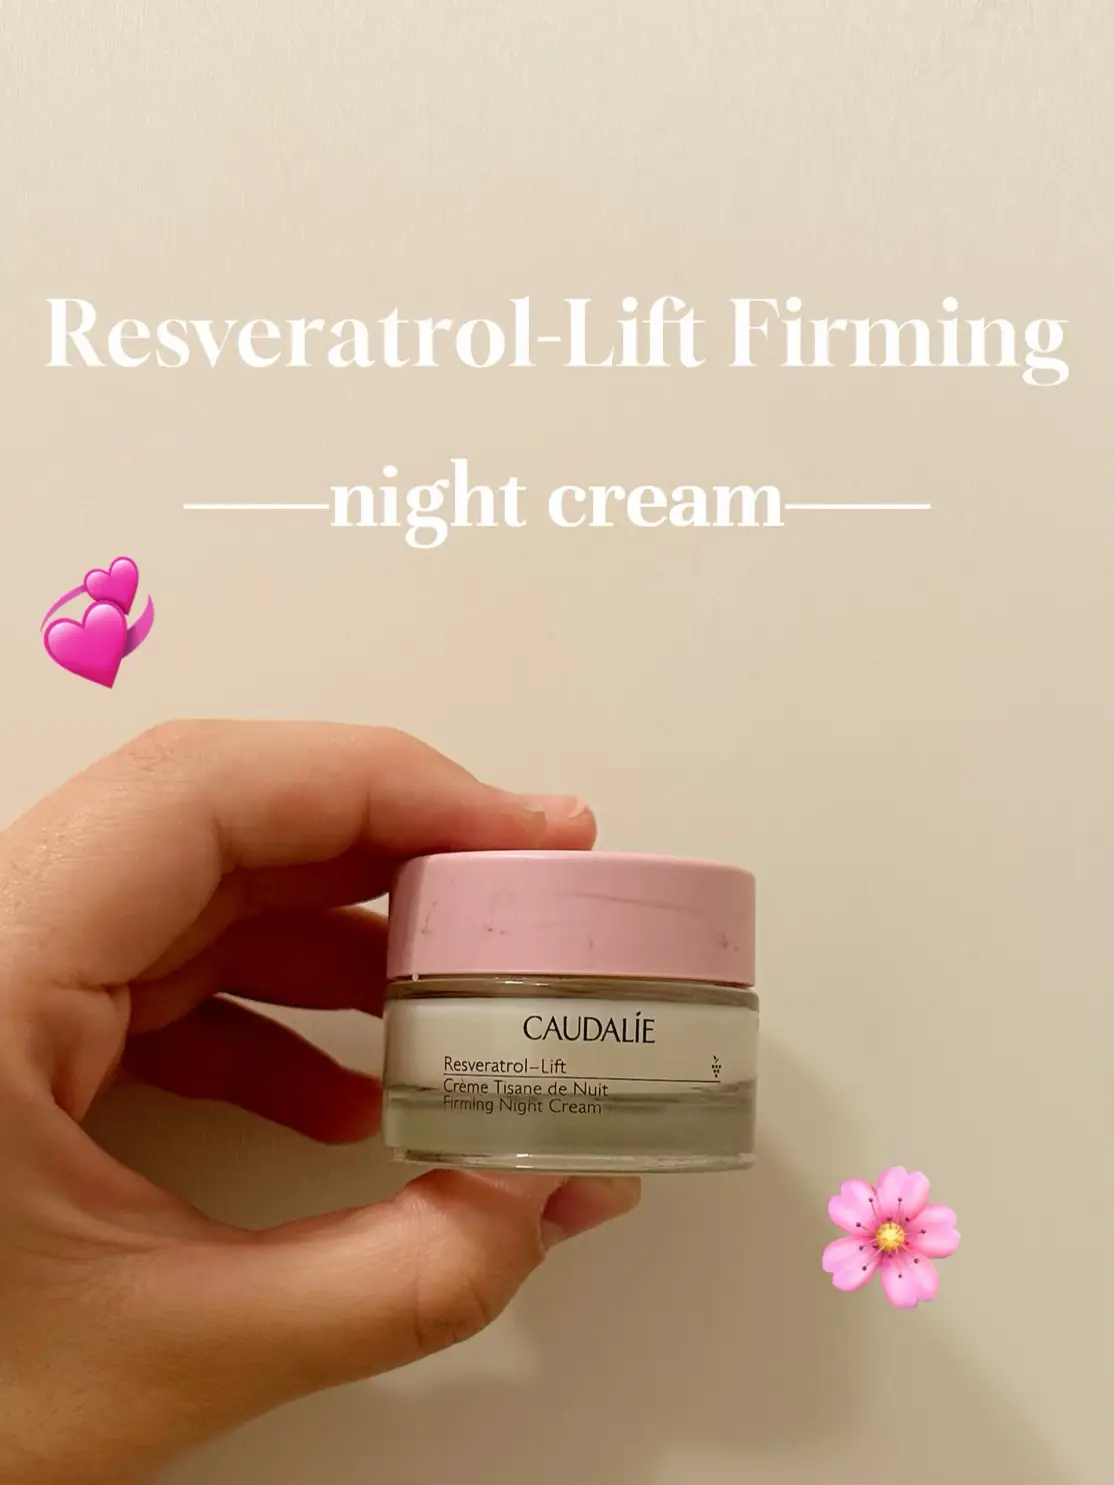 Caudalie resveratrol lift firming night cream 50ml 1.6fl.oz